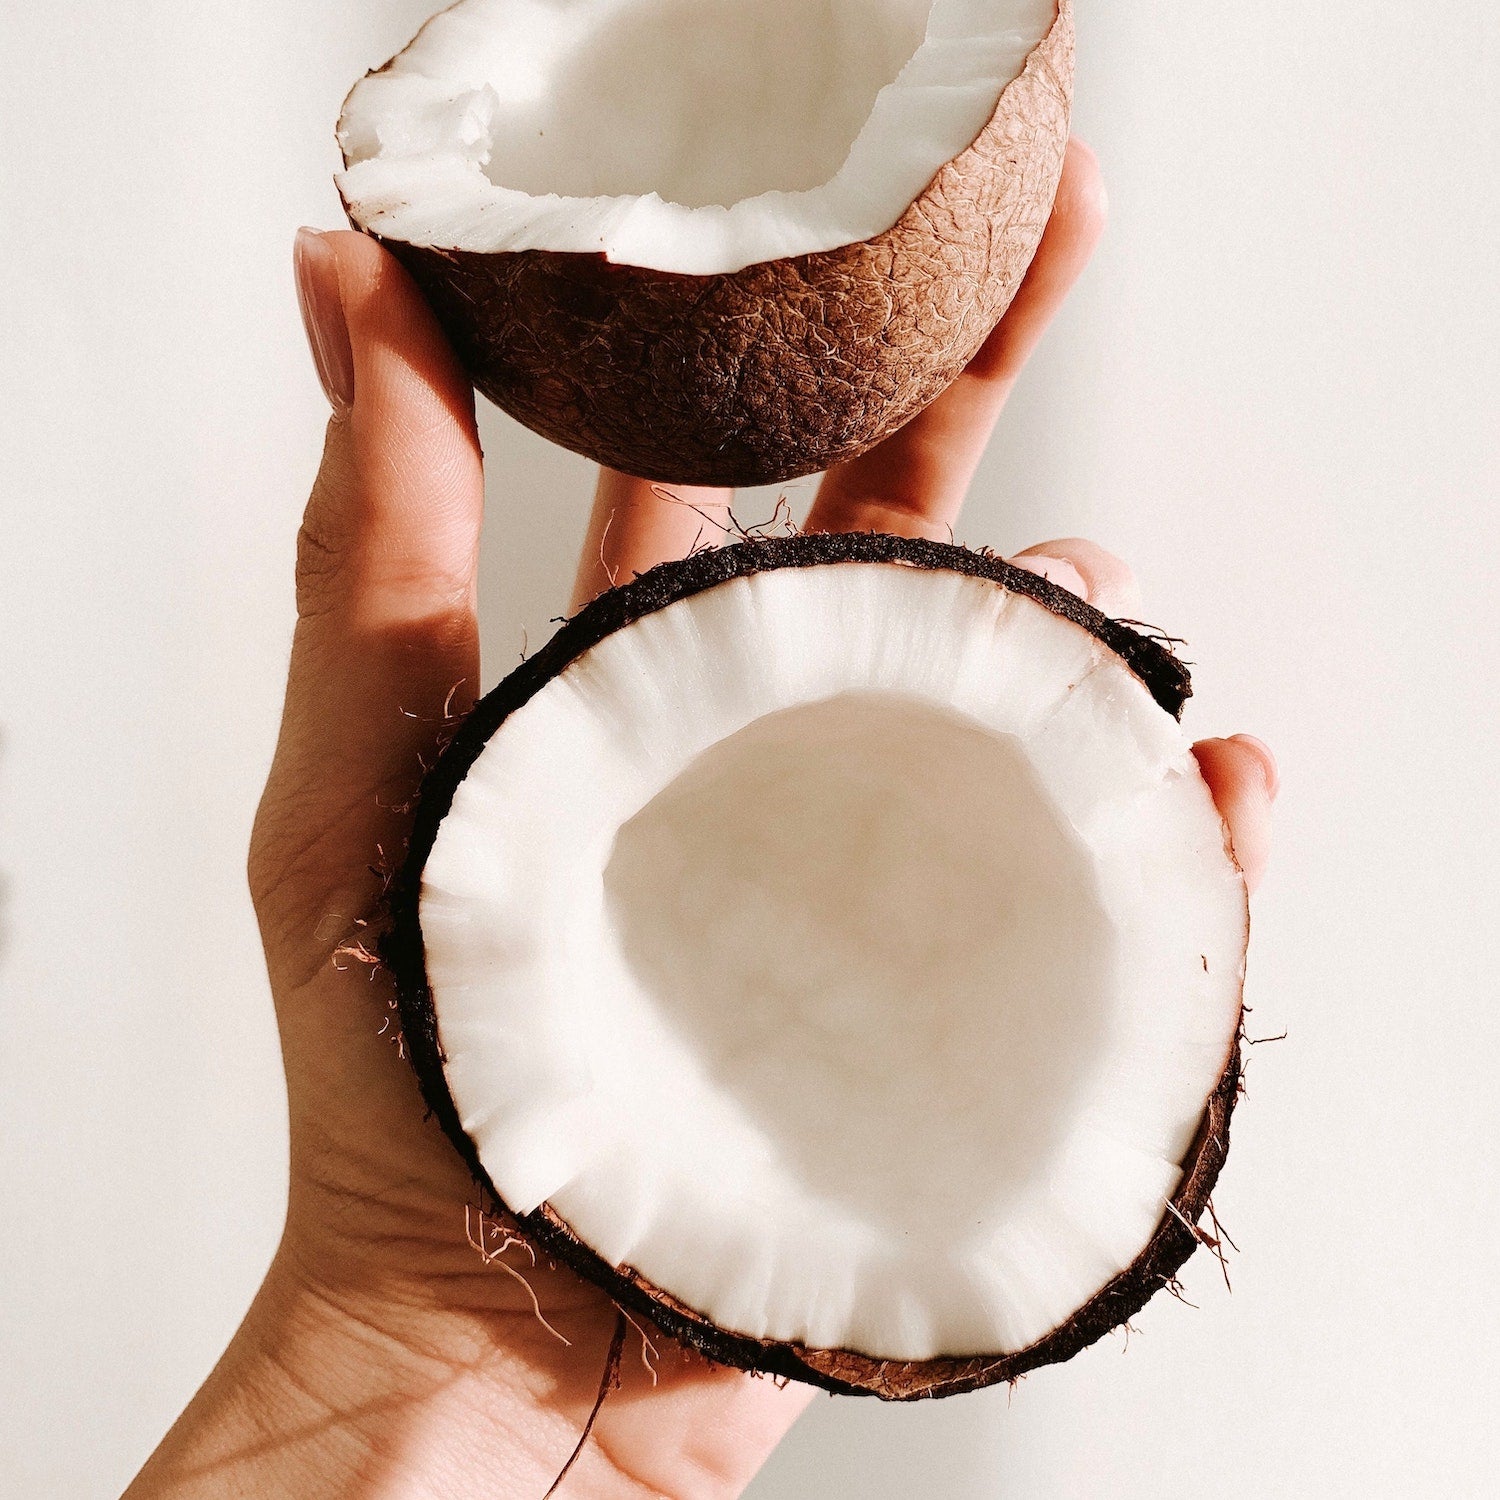 Coconut split into two